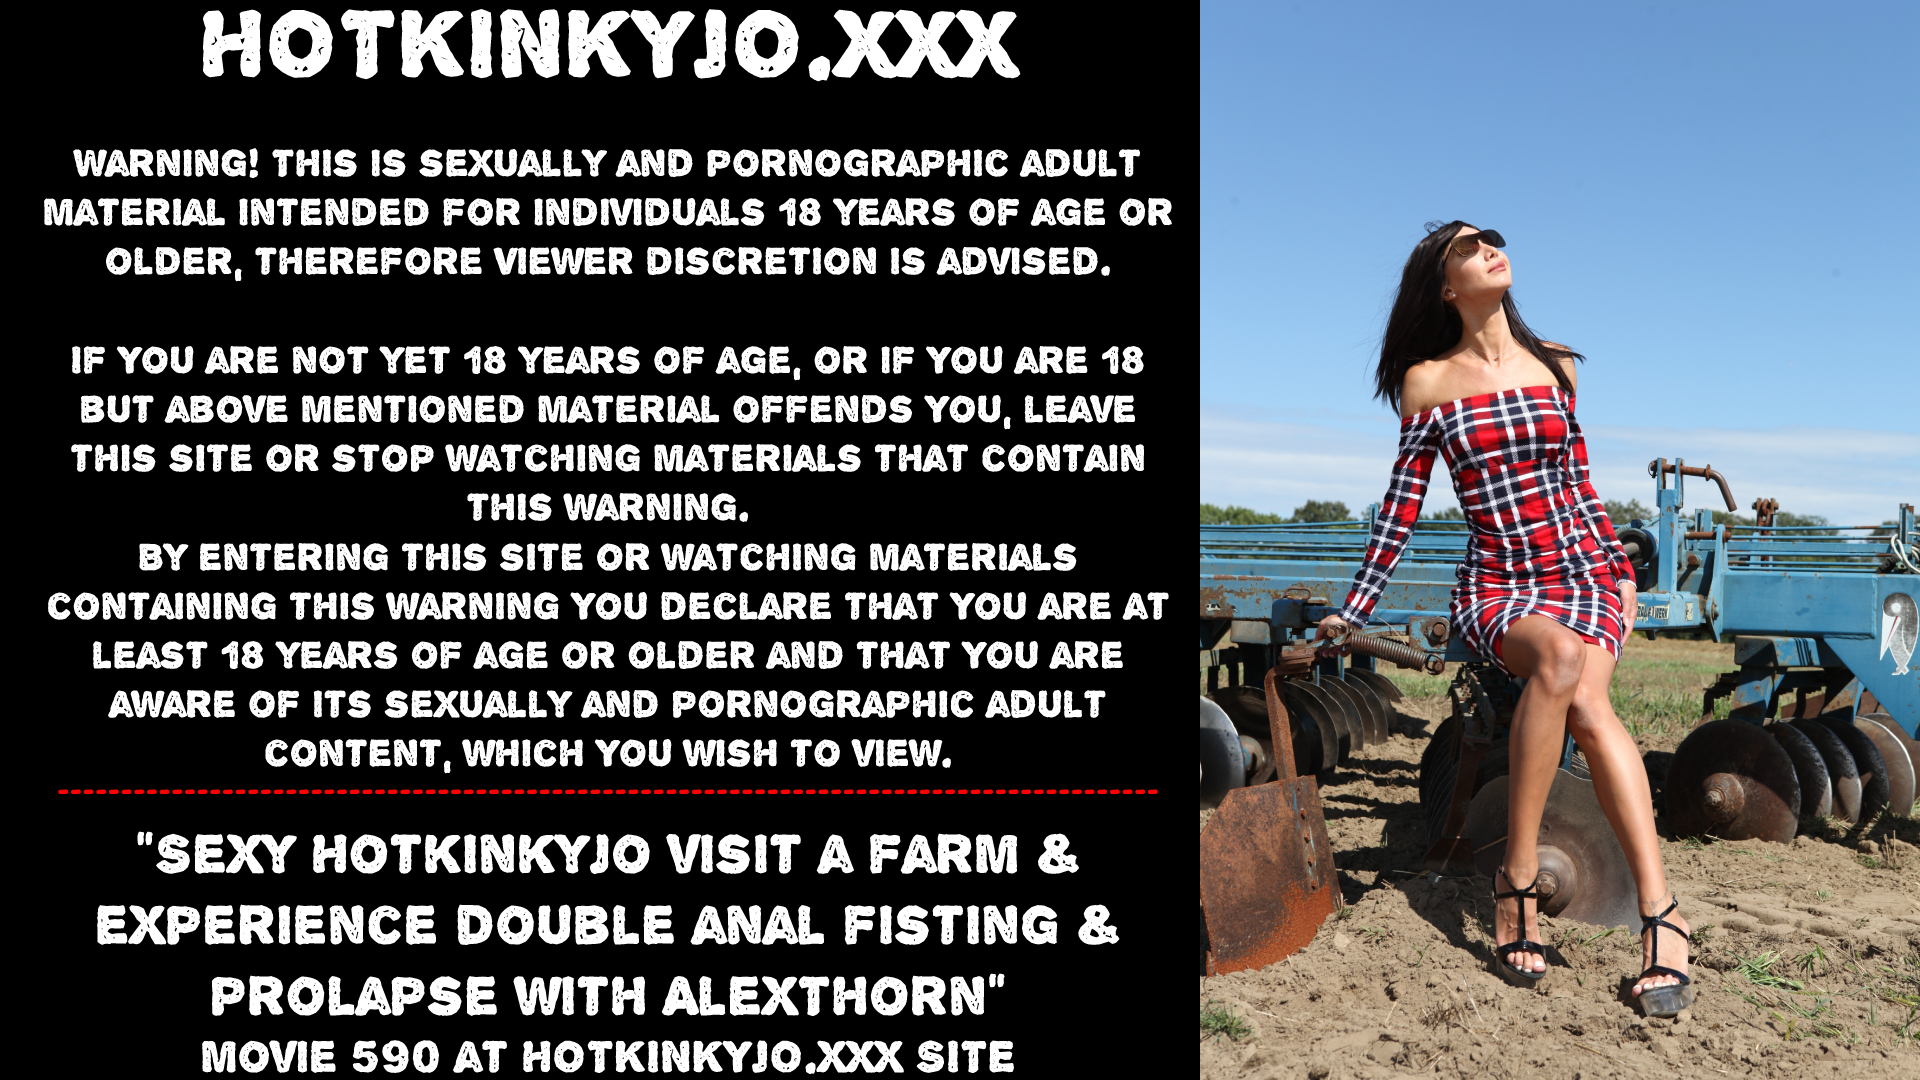 Hotkinkyjo visit farm & experience double anal fisting